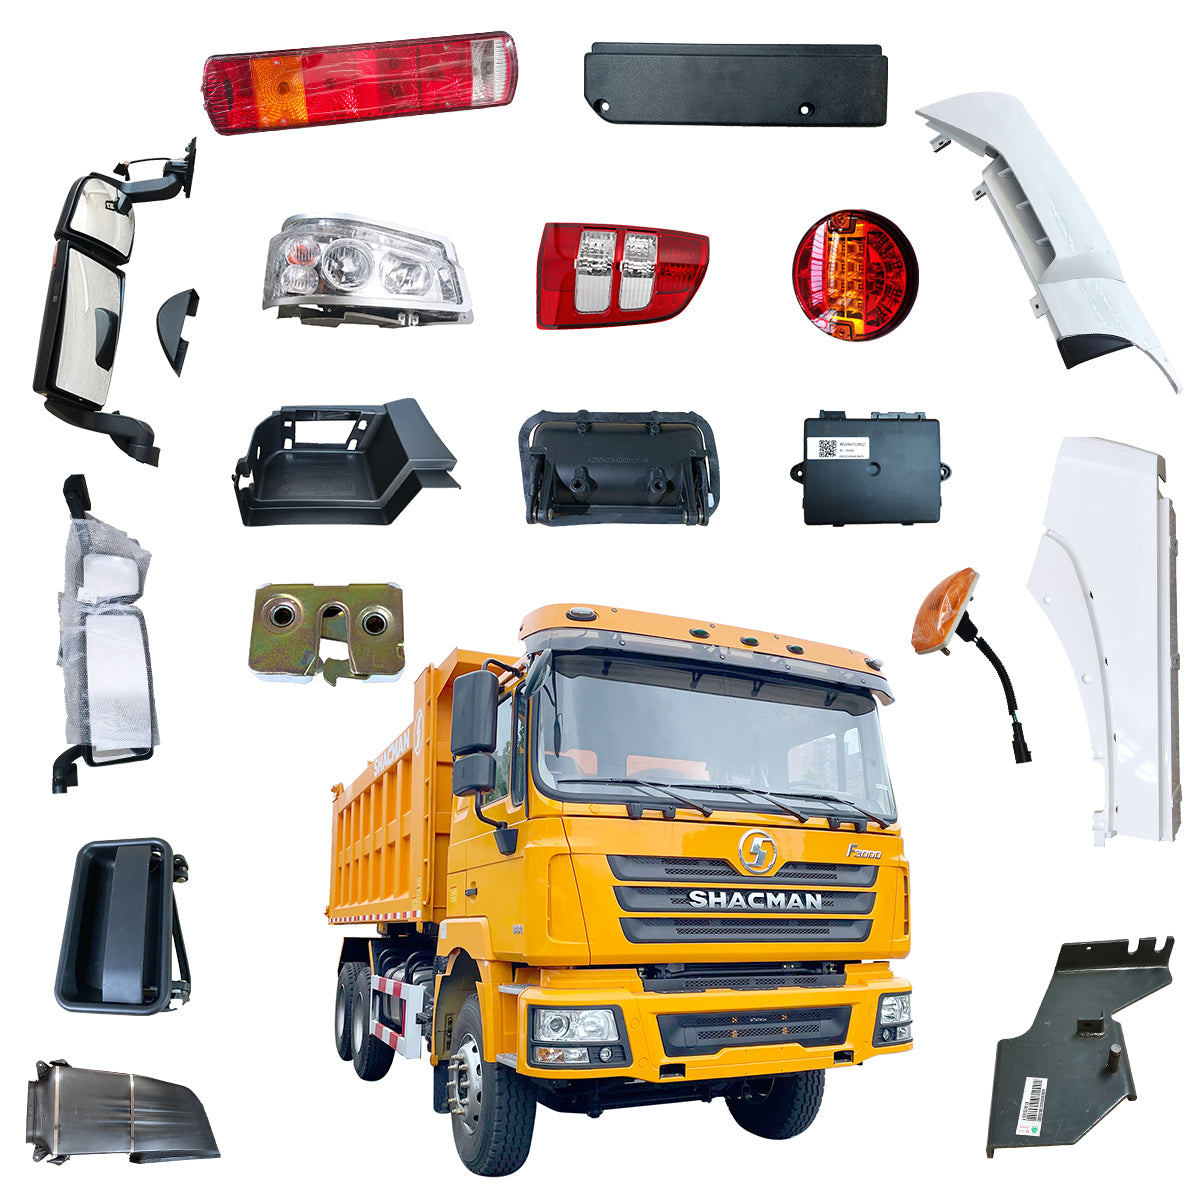 Truck Accessories